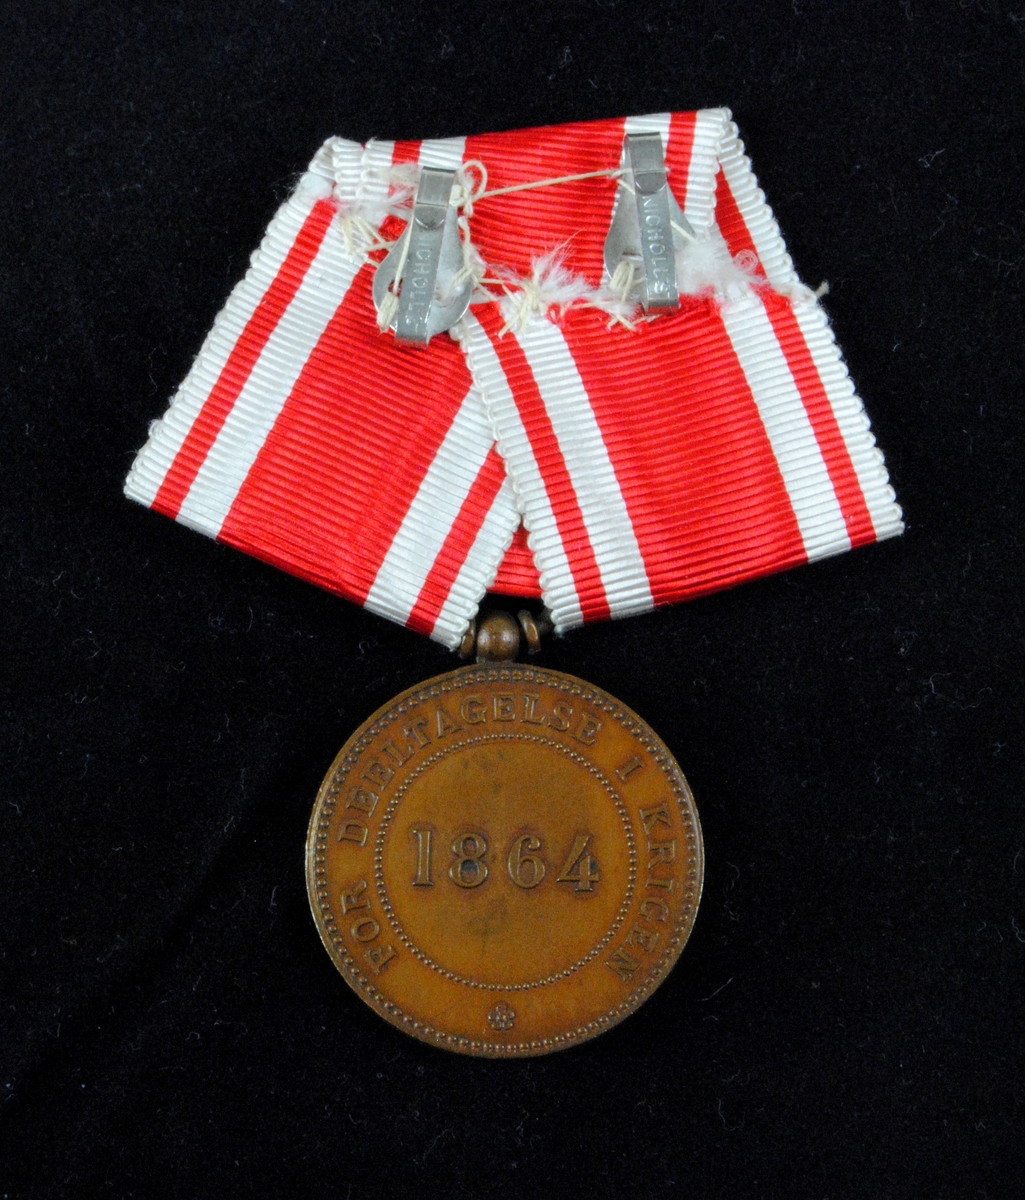 "Erindringsmedalje for Krigen 1864". Medaljen pryds av Christian IX:s profil i relief. Medaljen har ett röd- och vitrandigt ordensband.